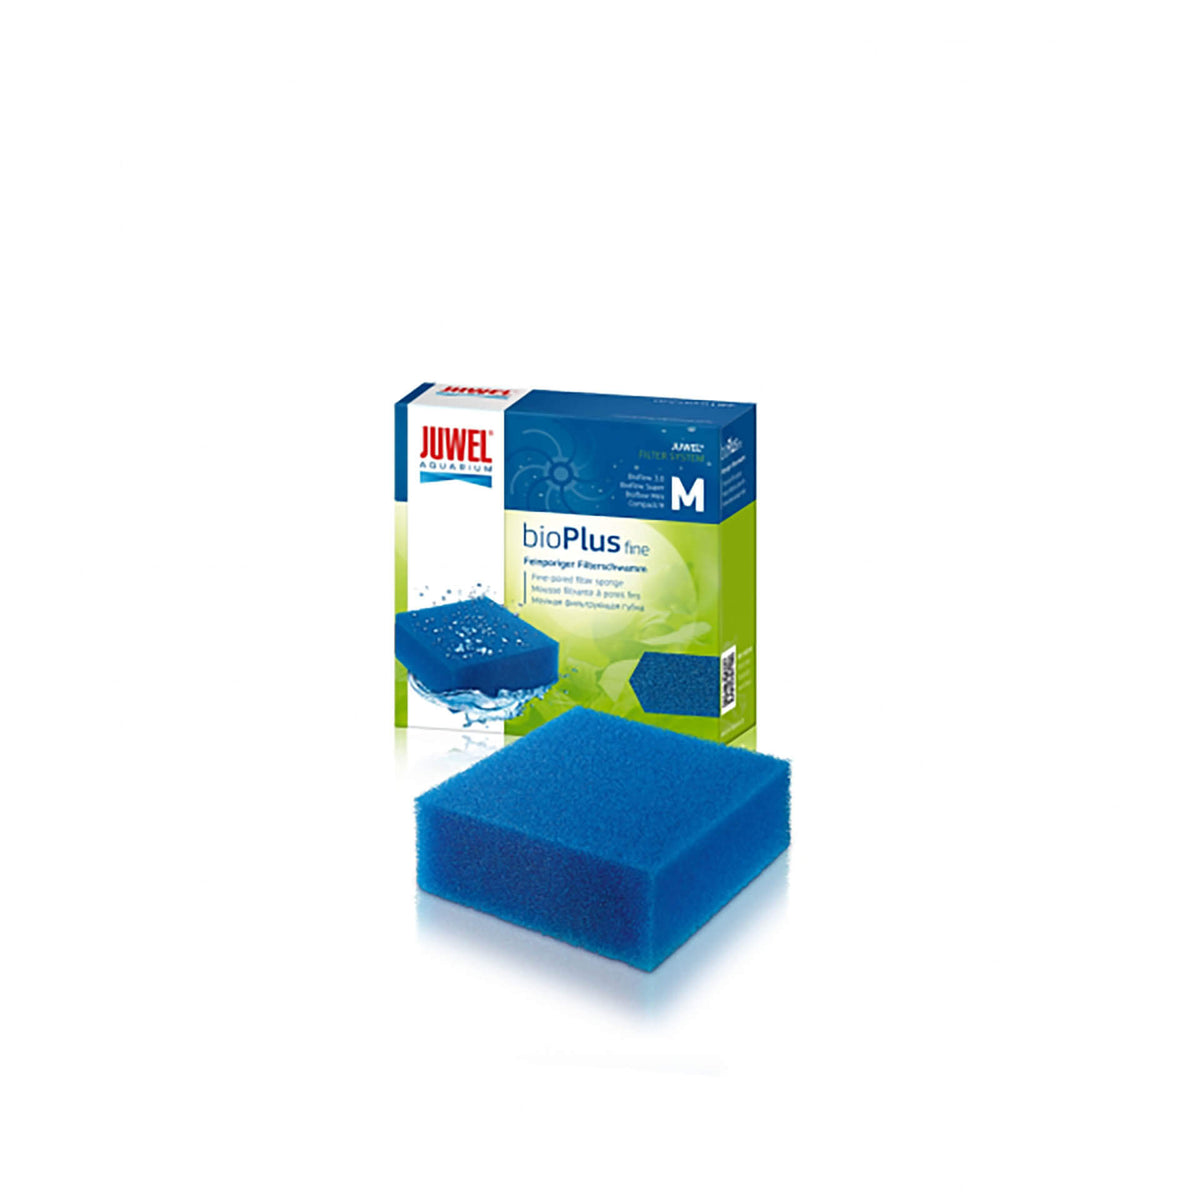 Juwel BioPlus Filter Sponge Fine Compact - 1 Pack